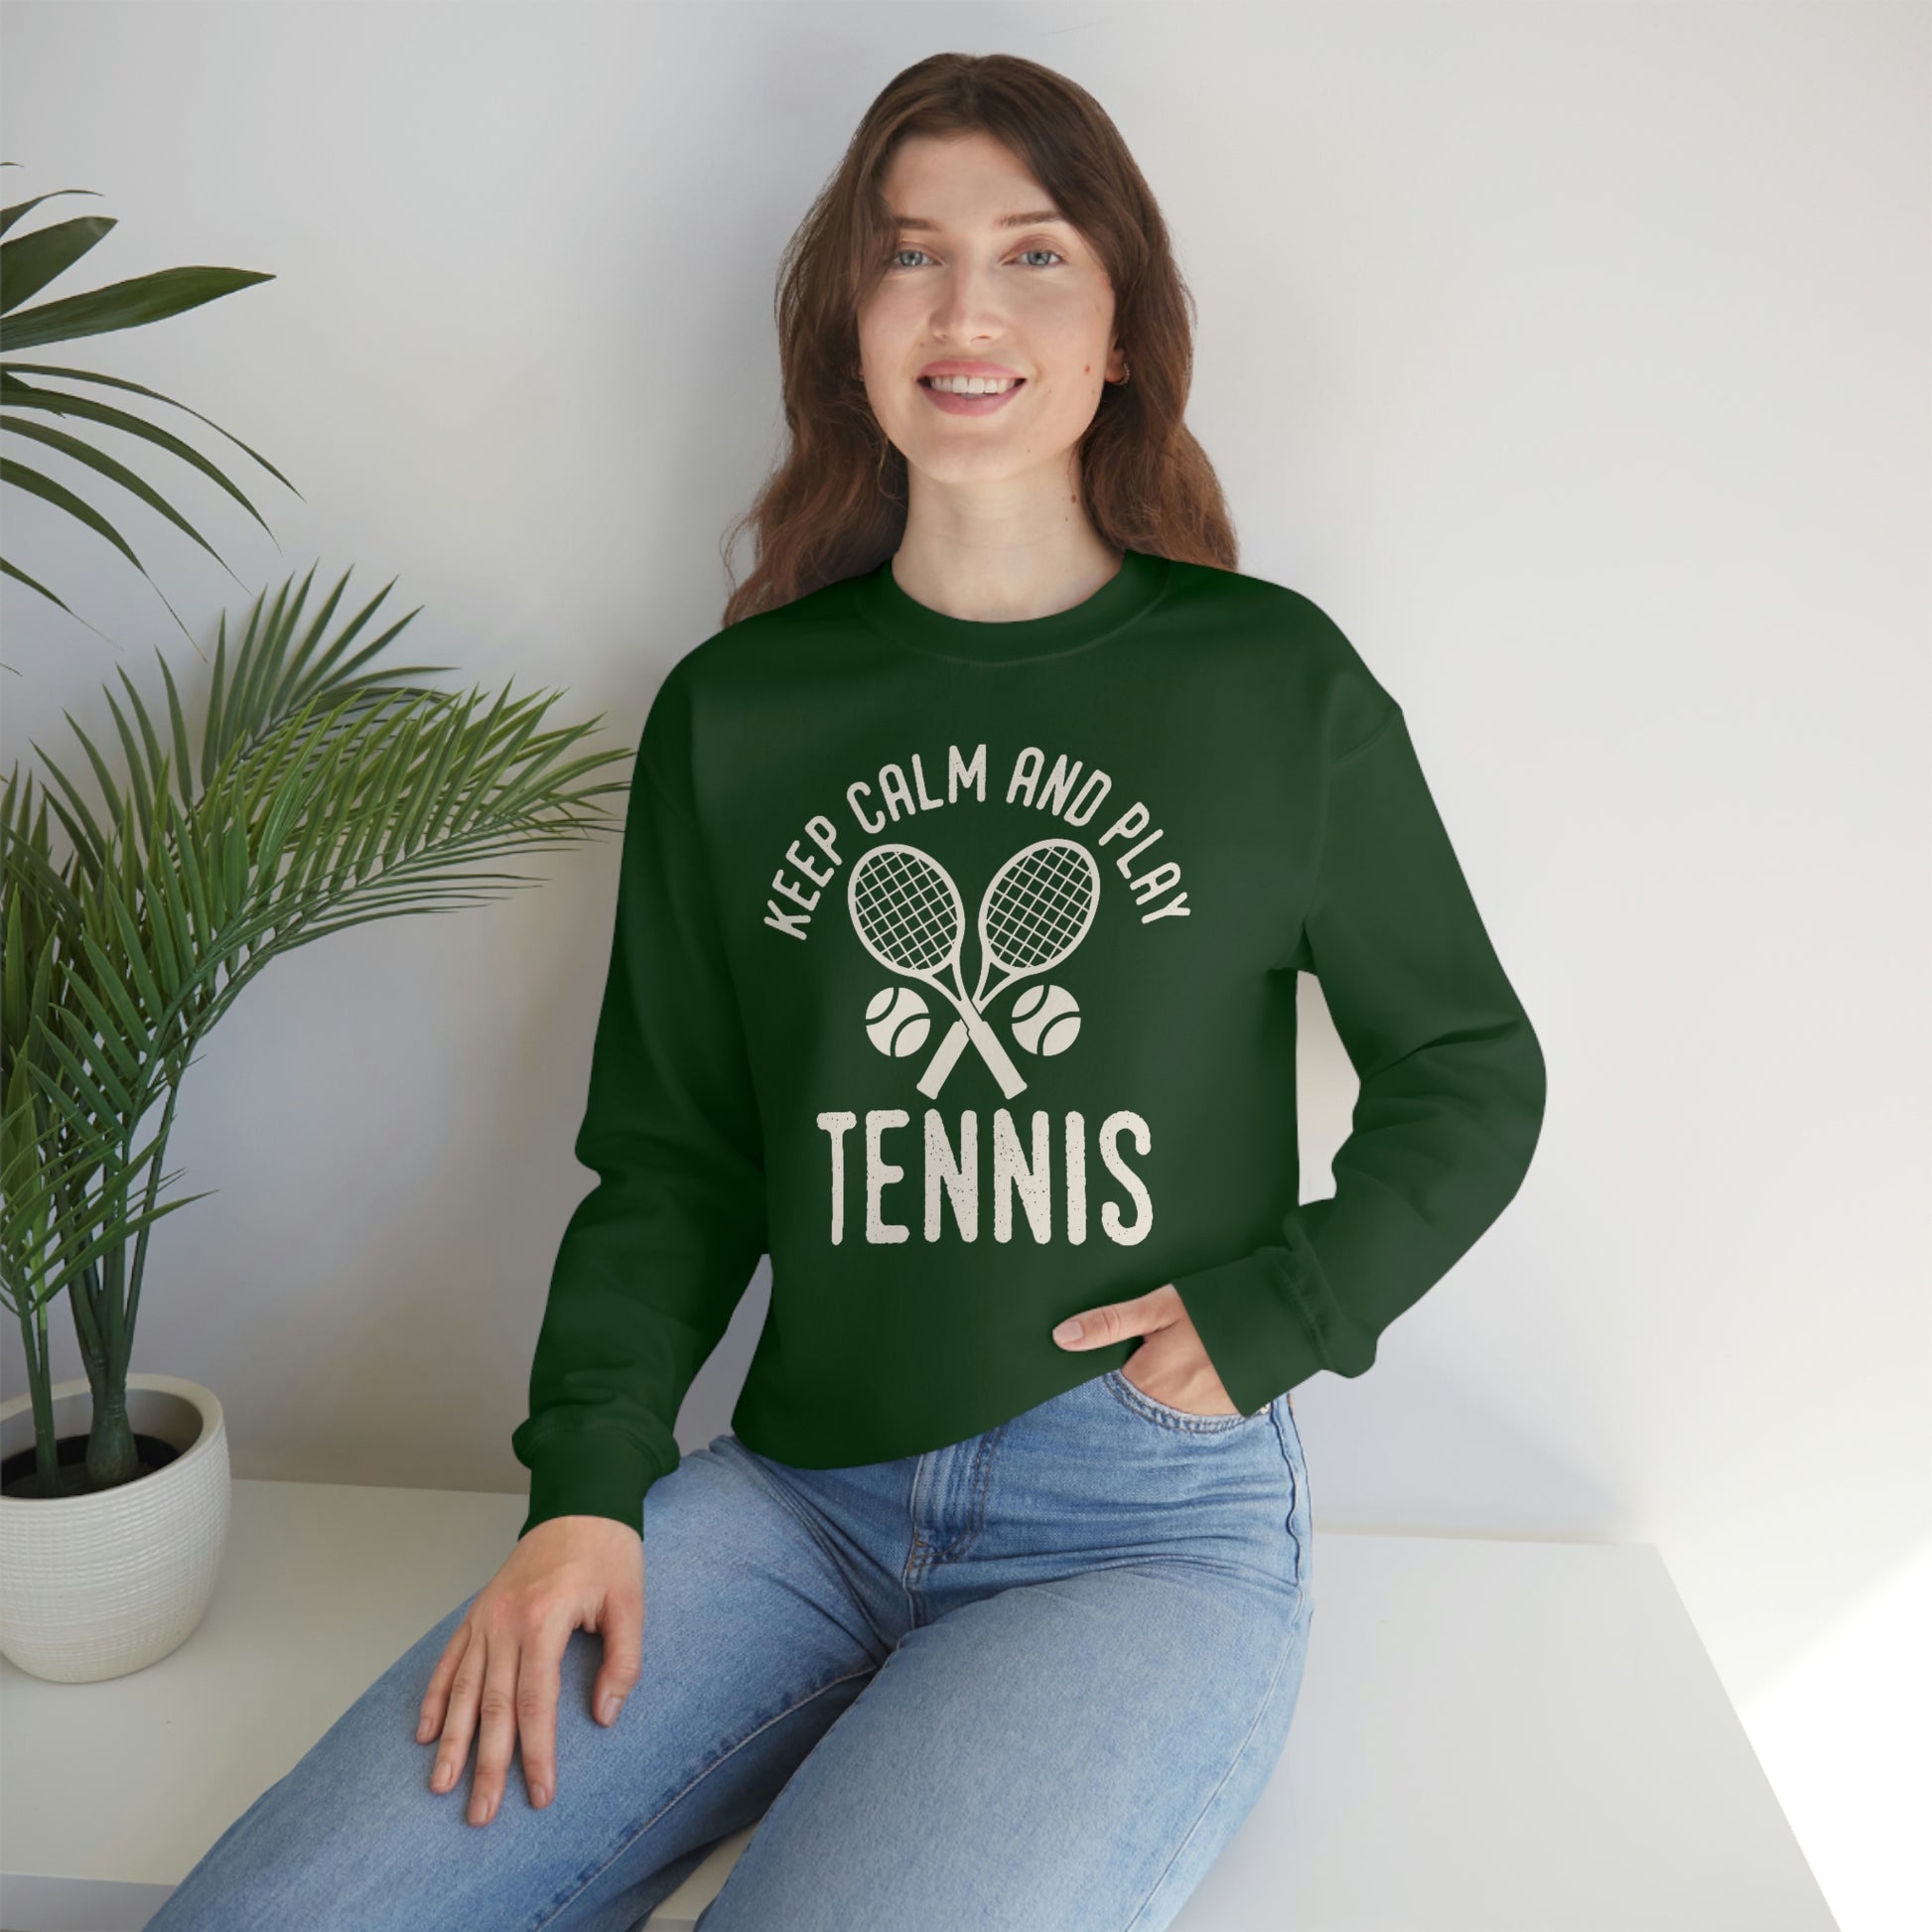 Tennis Sweatshirt, Funny Rackets Graphic Crewneck Fleece Cotton Sweater Jumper Pullover Men Women Adult Aesthetic Top Starcove Fashion